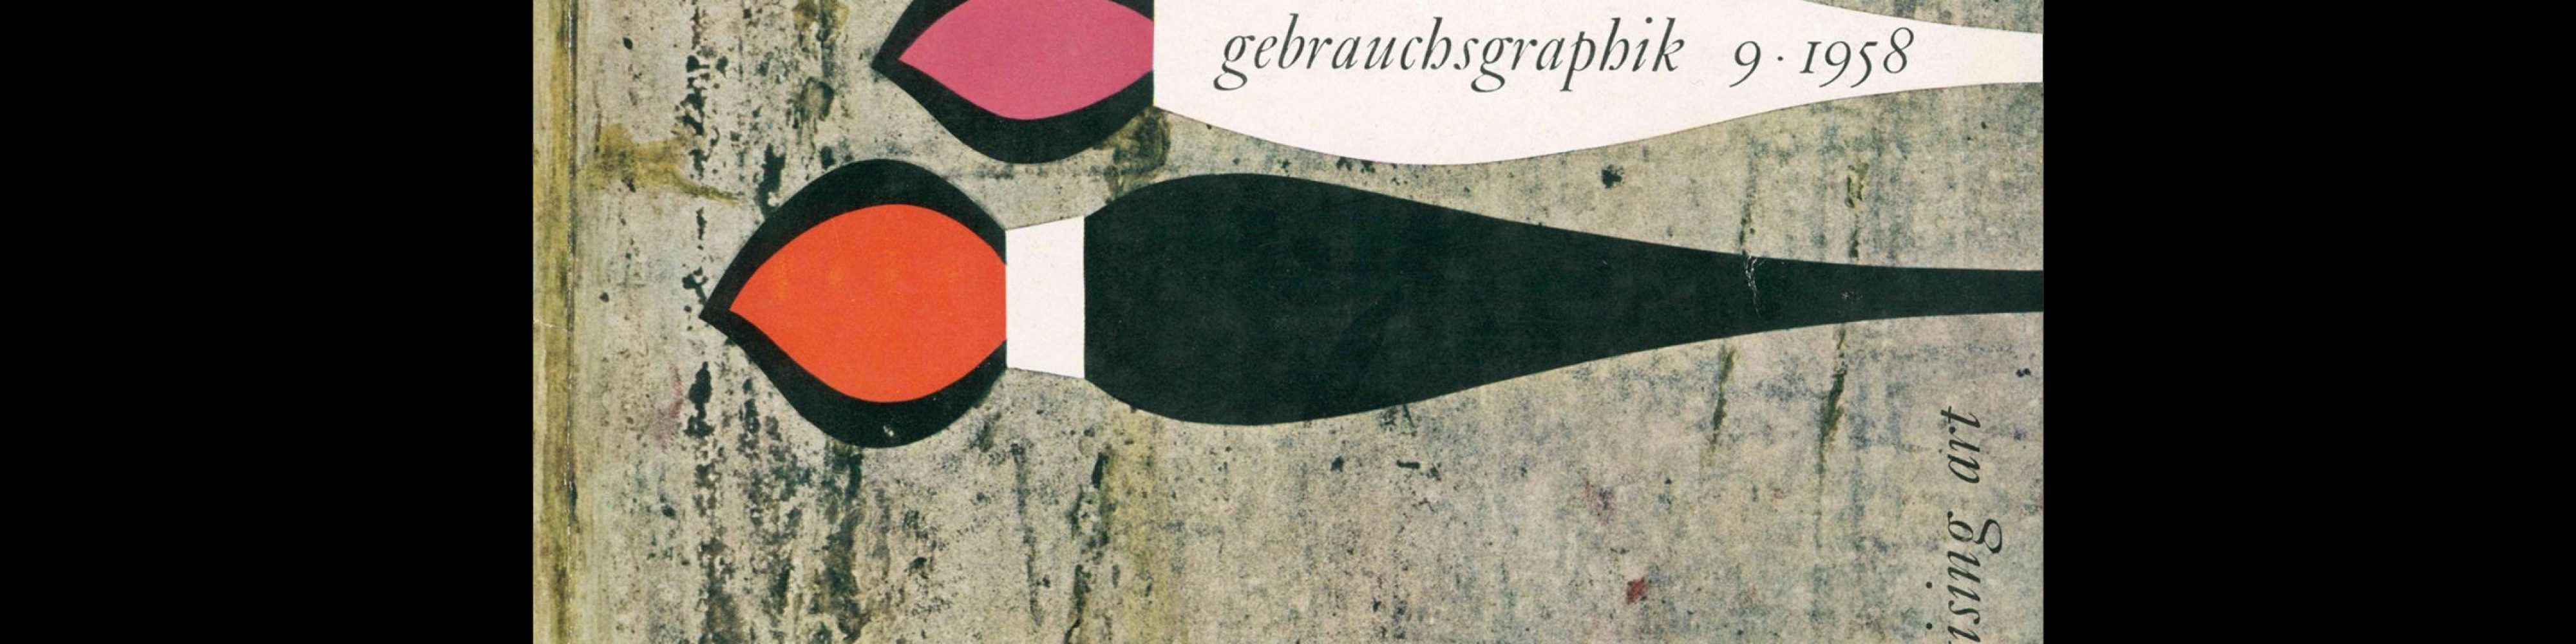 Gebrauchsgraphik, 9, 1958. Cover design by Willi H. Lippert